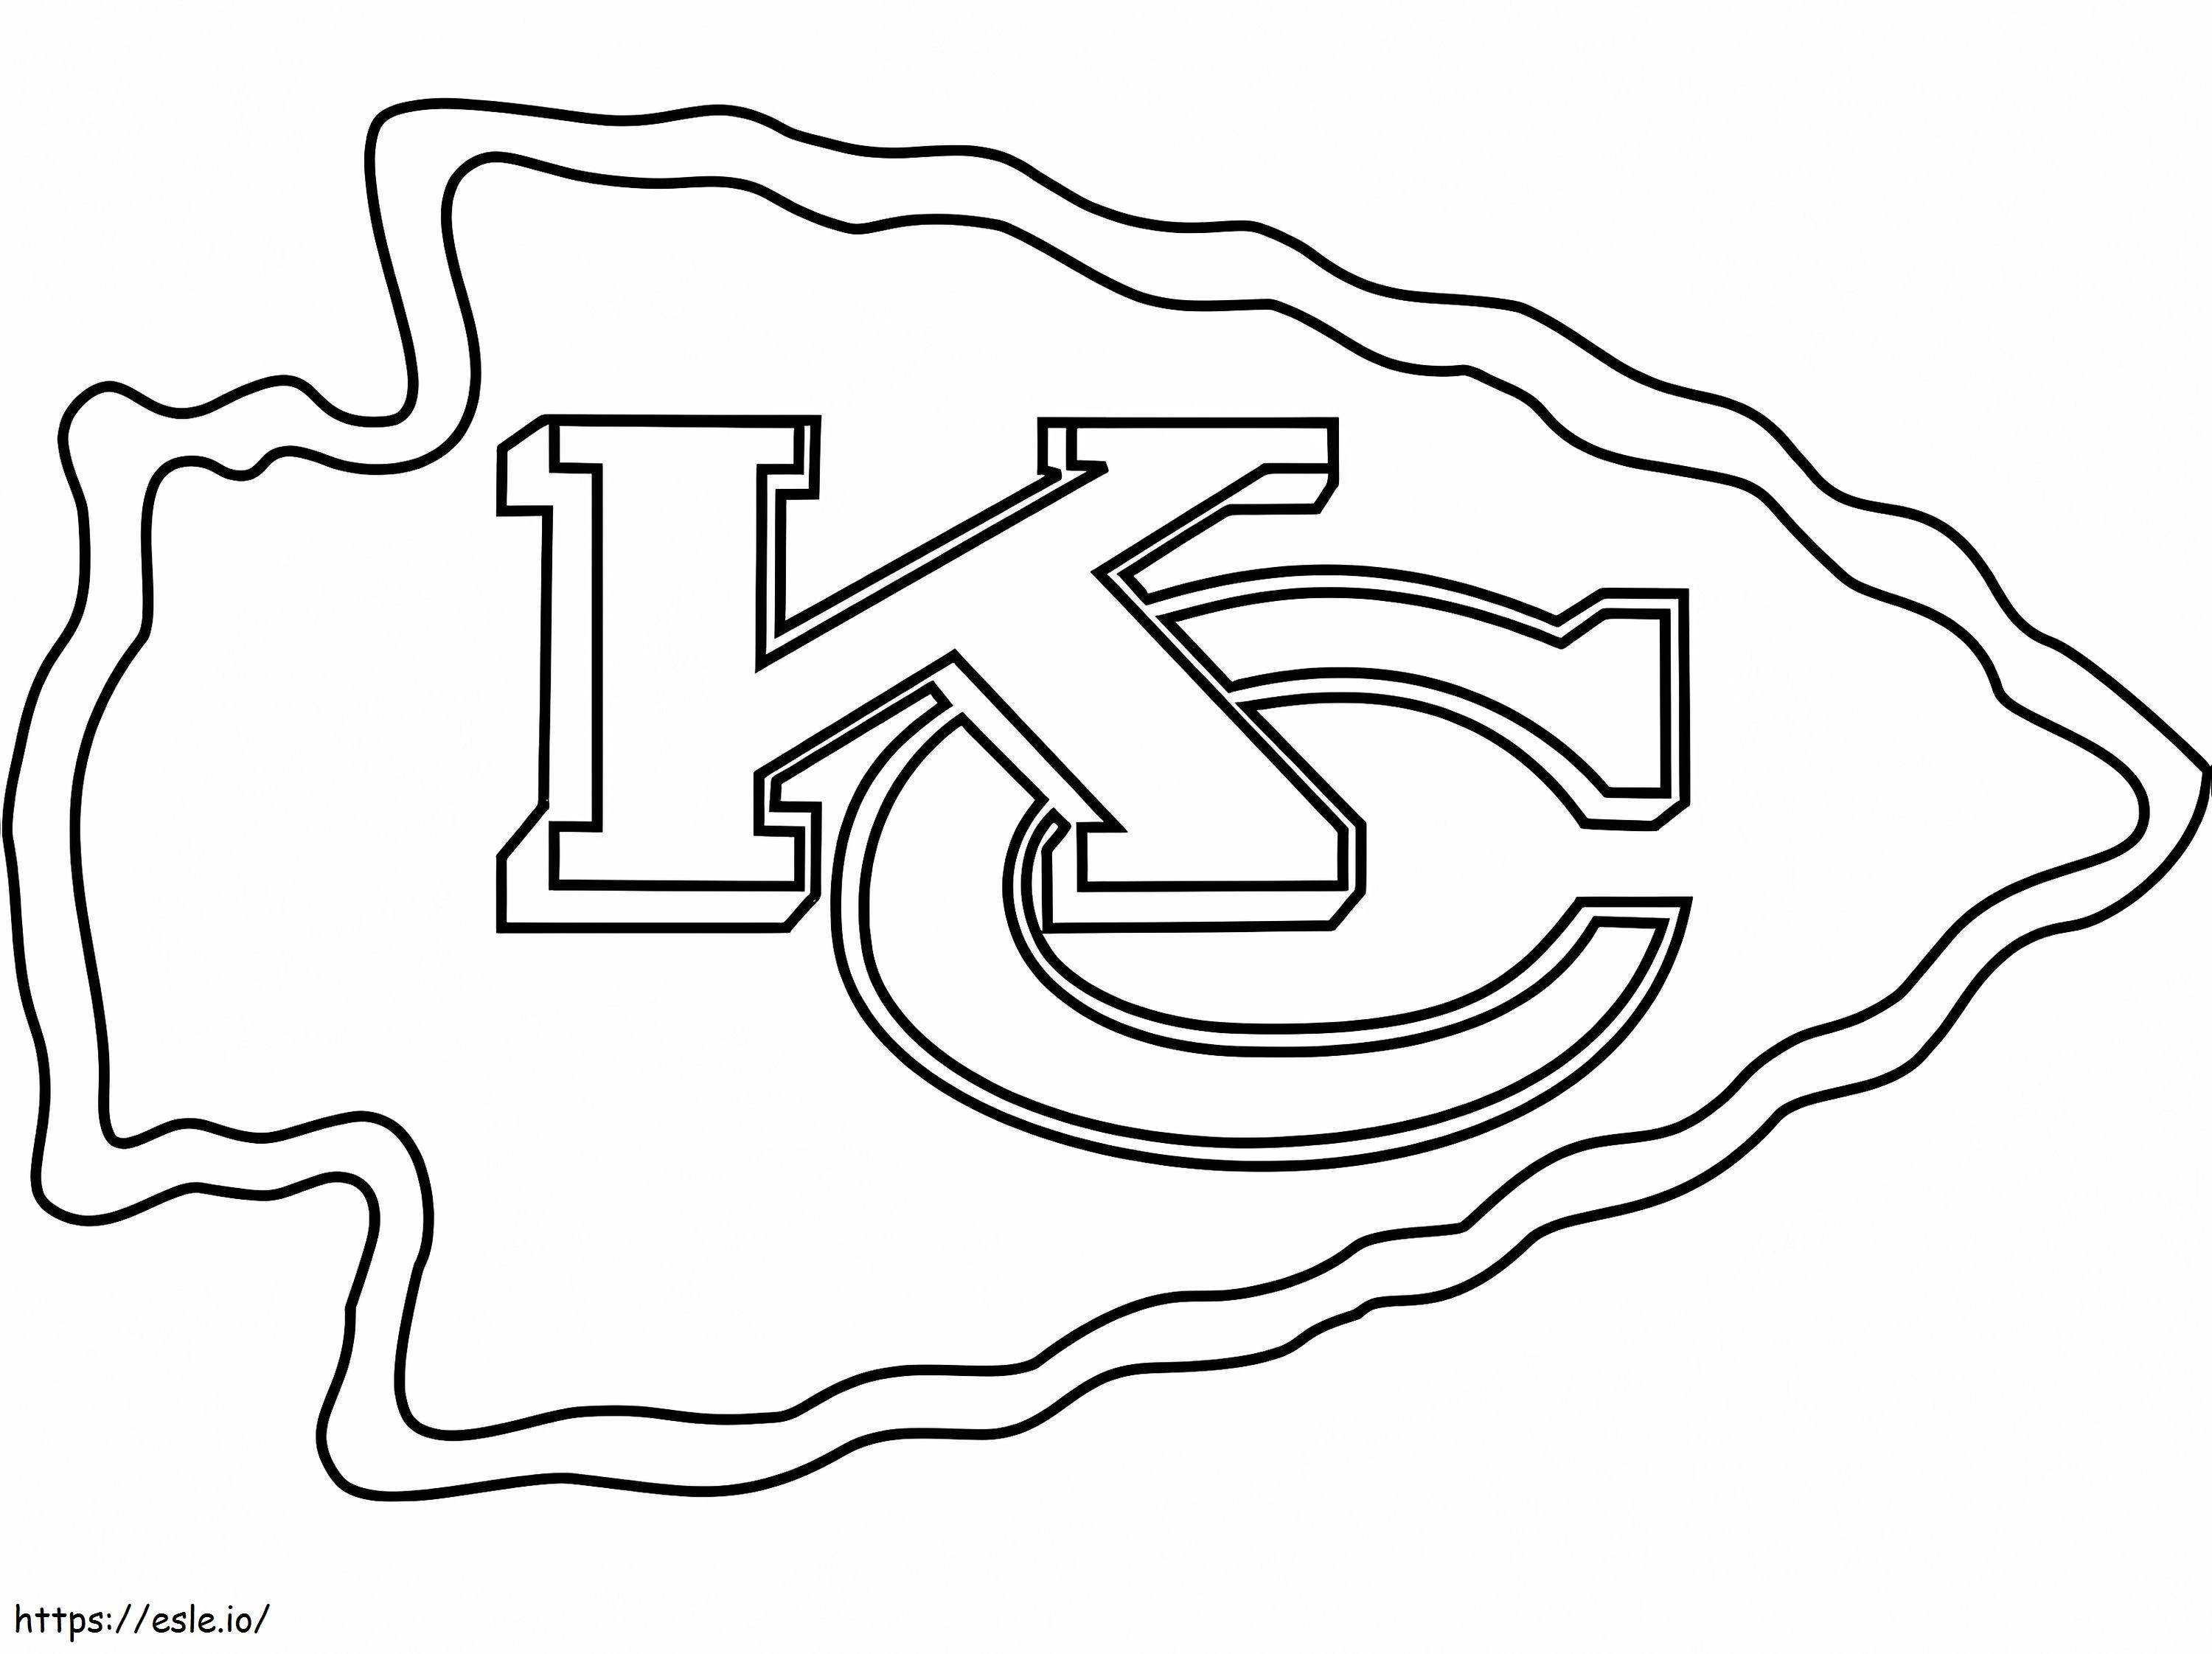 Logotipo gratuito do Kansas City Chiefs para colorir